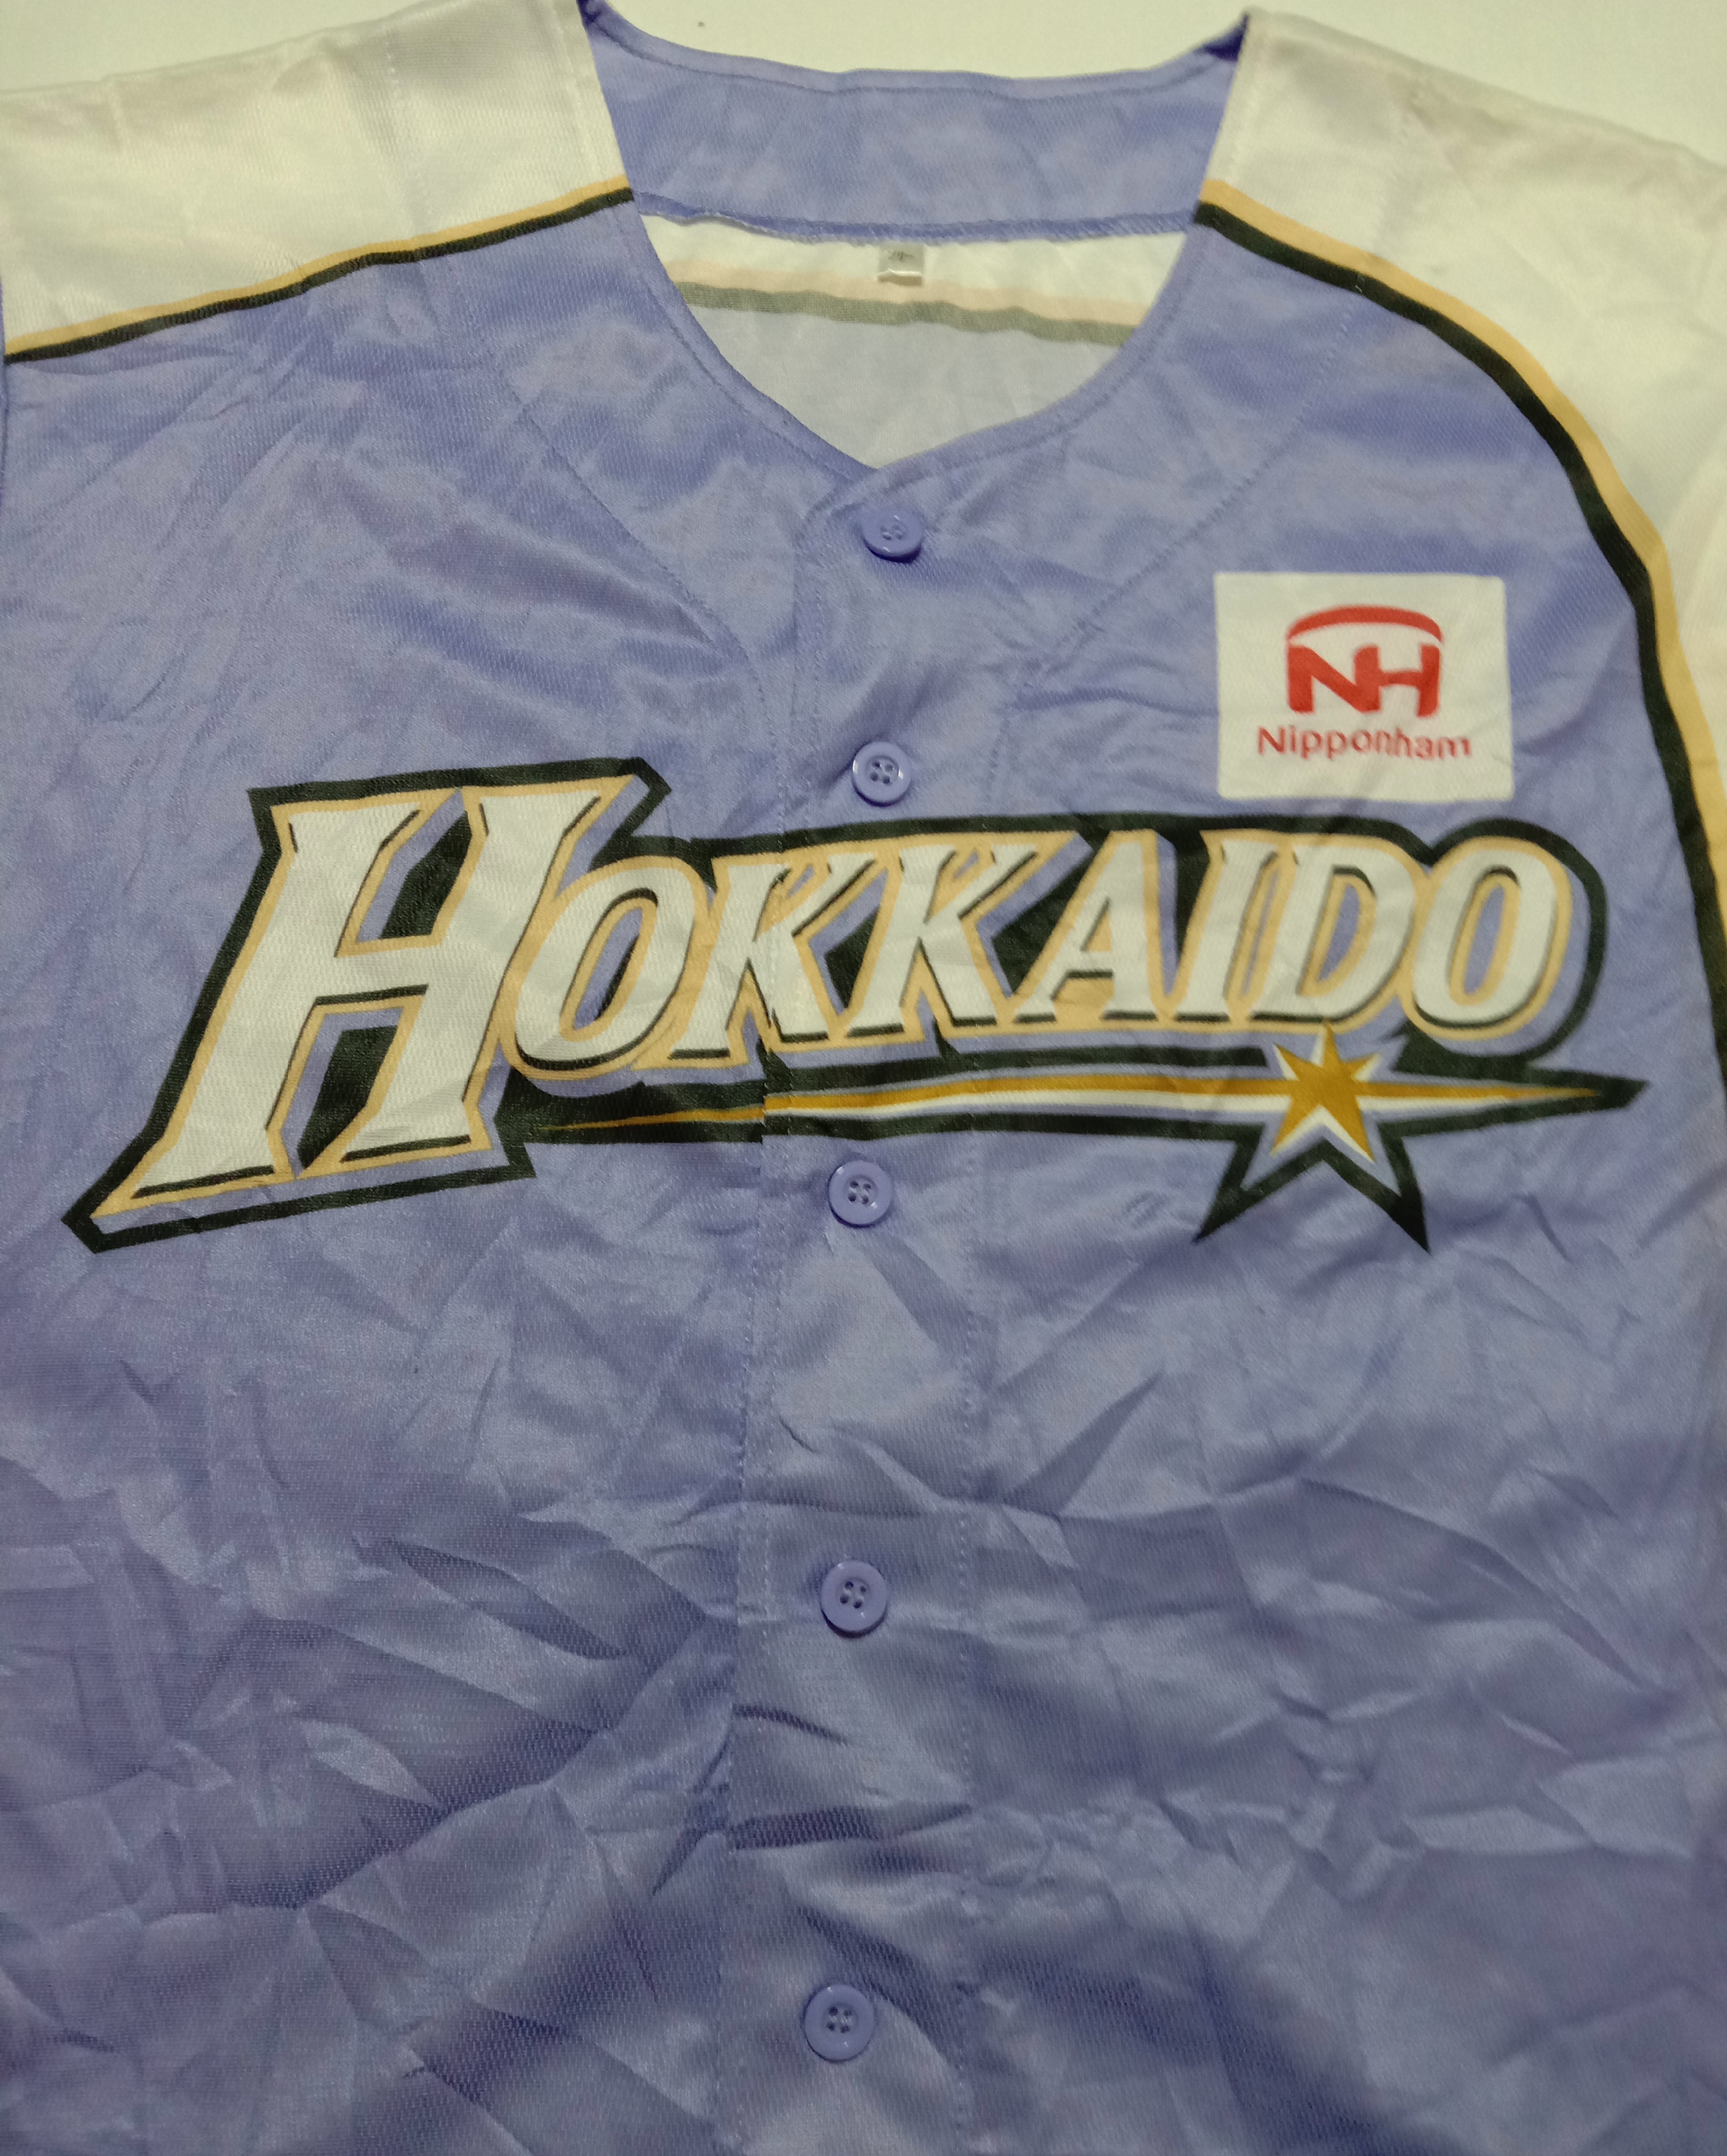 Other Designers Sportswear - Nippon Ham Fighters Hokkaido NPB Japan  Baseball Jersey, mrrarefashion